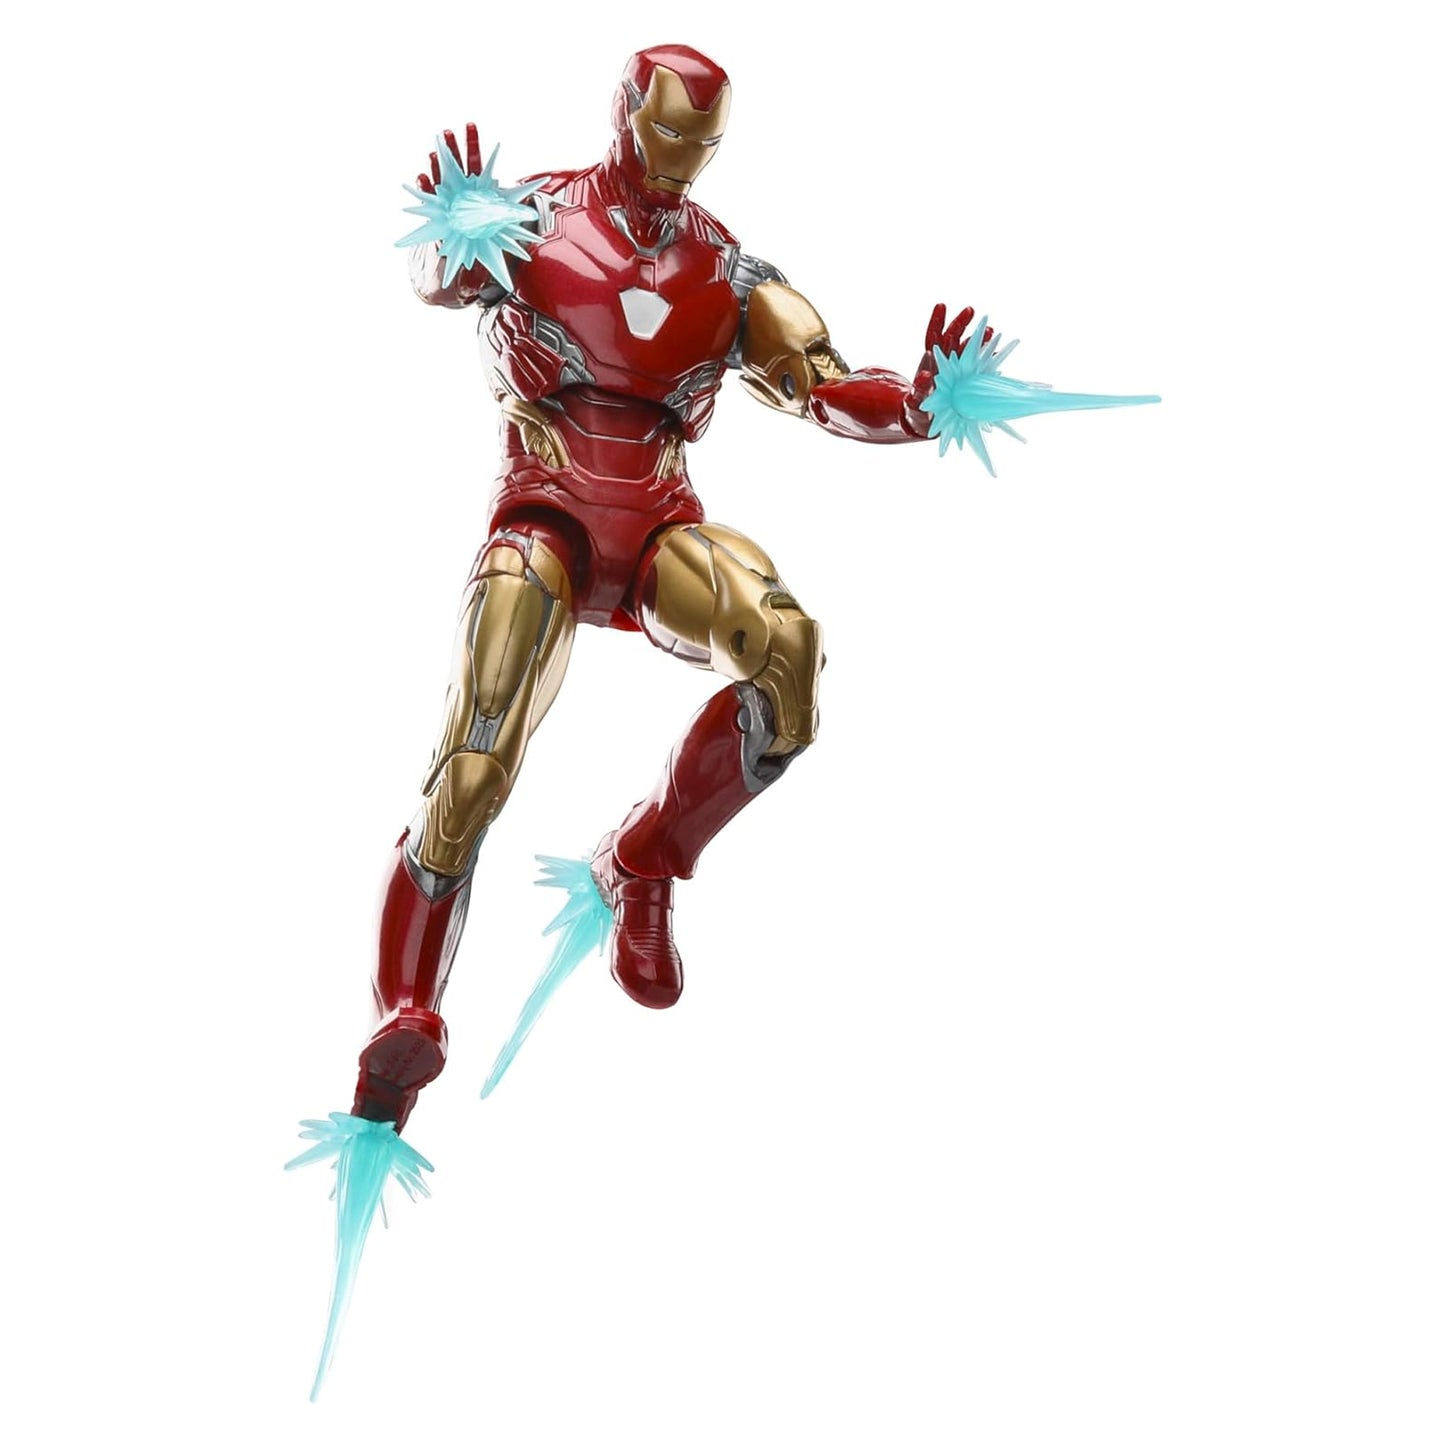 Marvel Legends Iron Man Mark 85 (Marvel Studios)